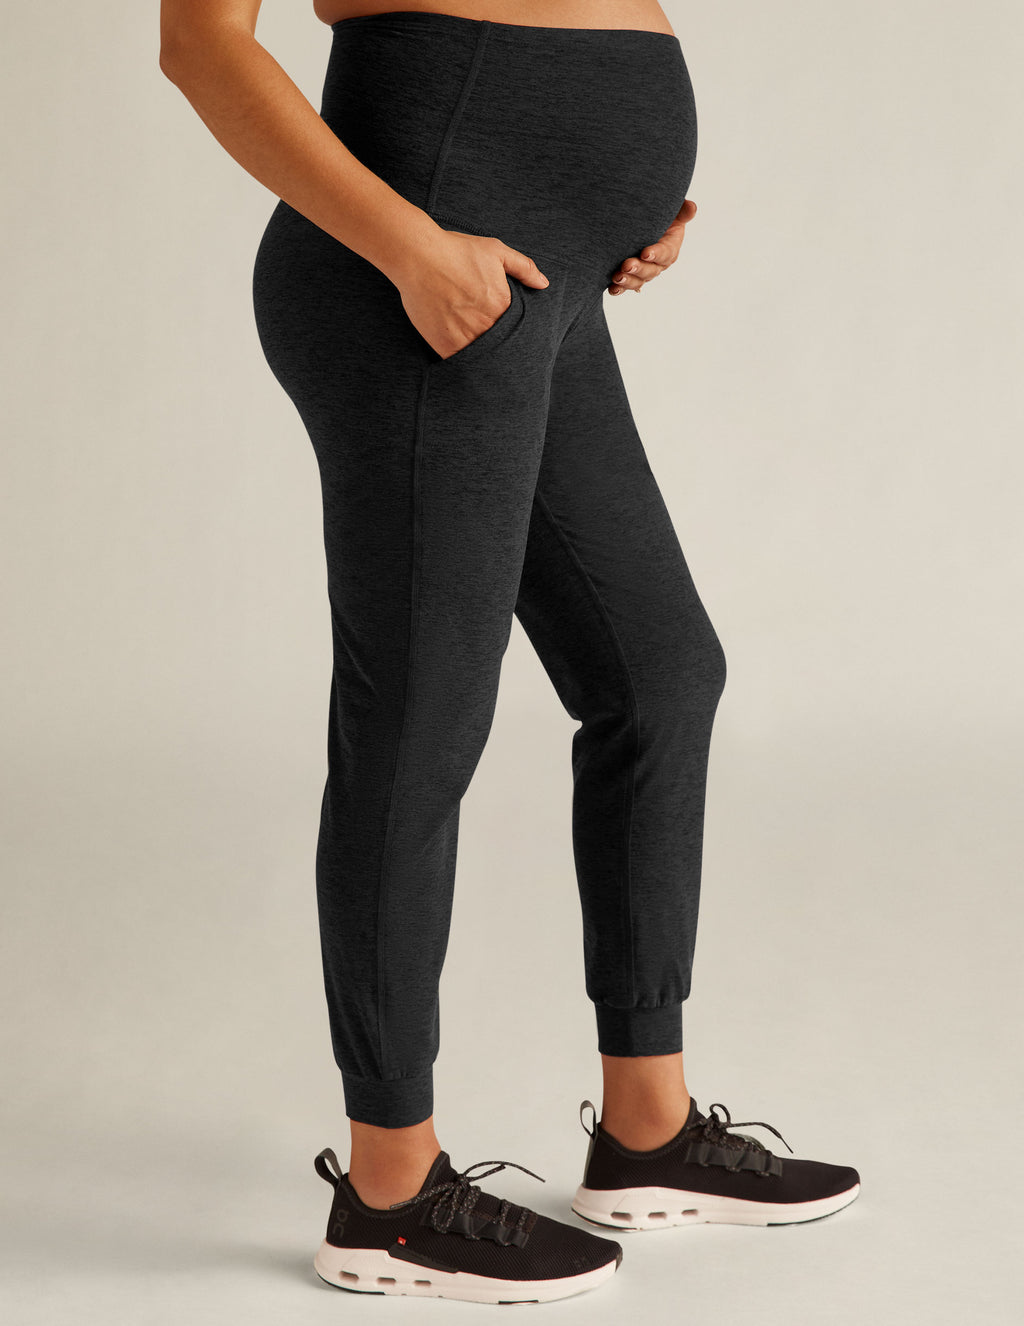 JNGSA Women's Maternity's Workout Leggings Over The Belly Pregnancy Yoga  Pants Soft Activewear Work Pants Black M 